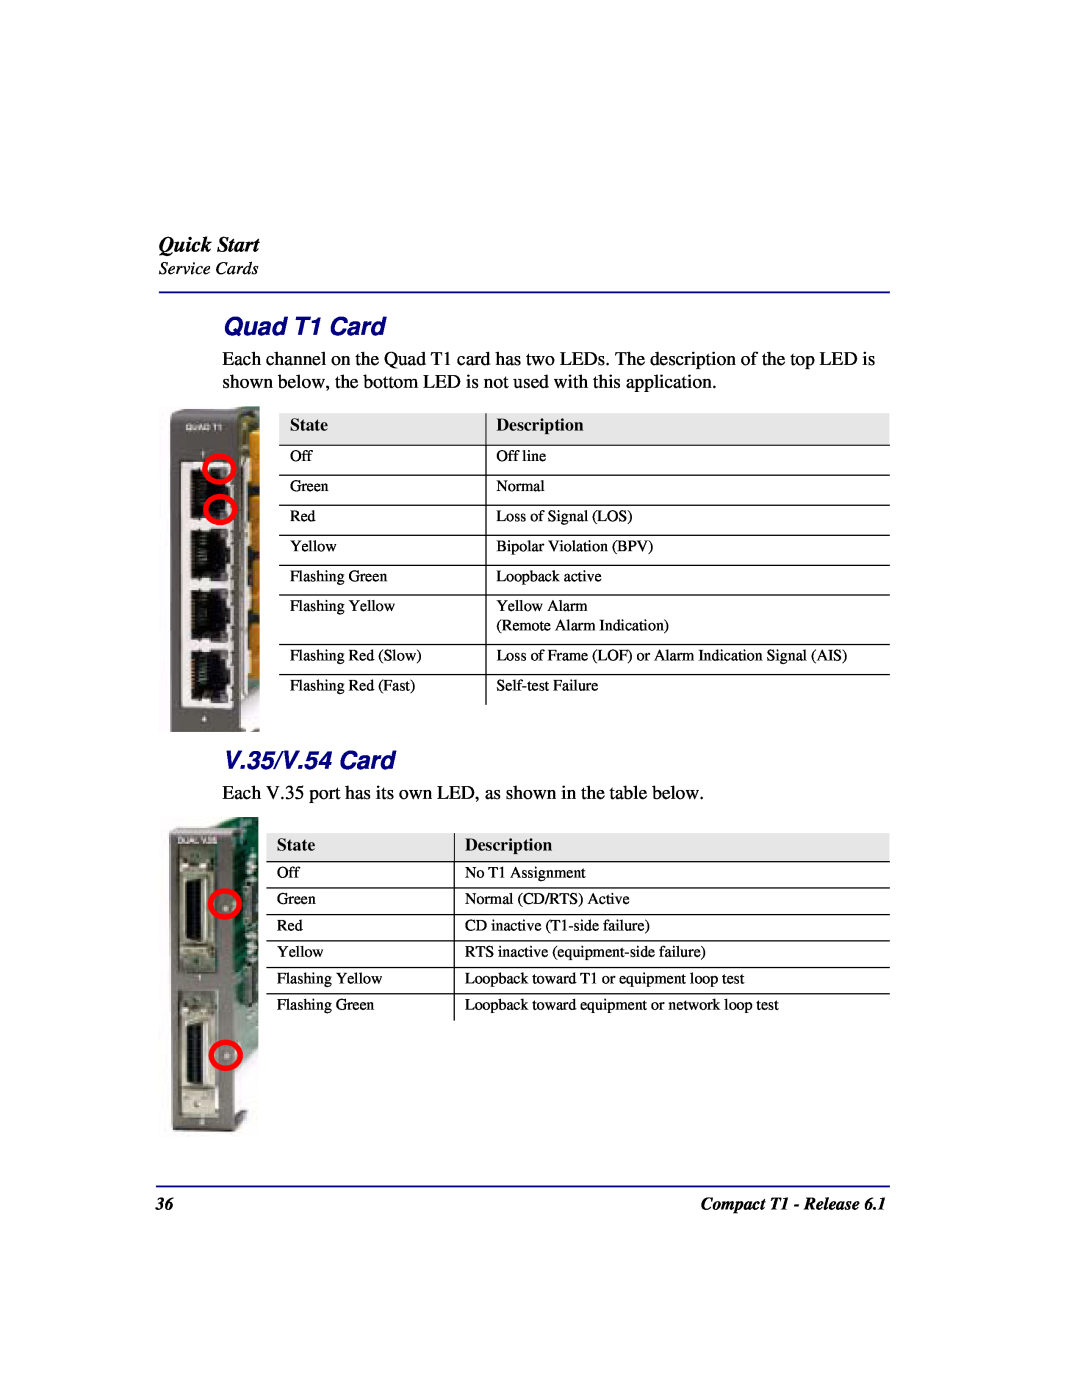 Black Box COMPACT T1 quick start Quad T1 Card, V.35/V.54 Card, Quick Start, Service Cards, Compact T1 - Release 